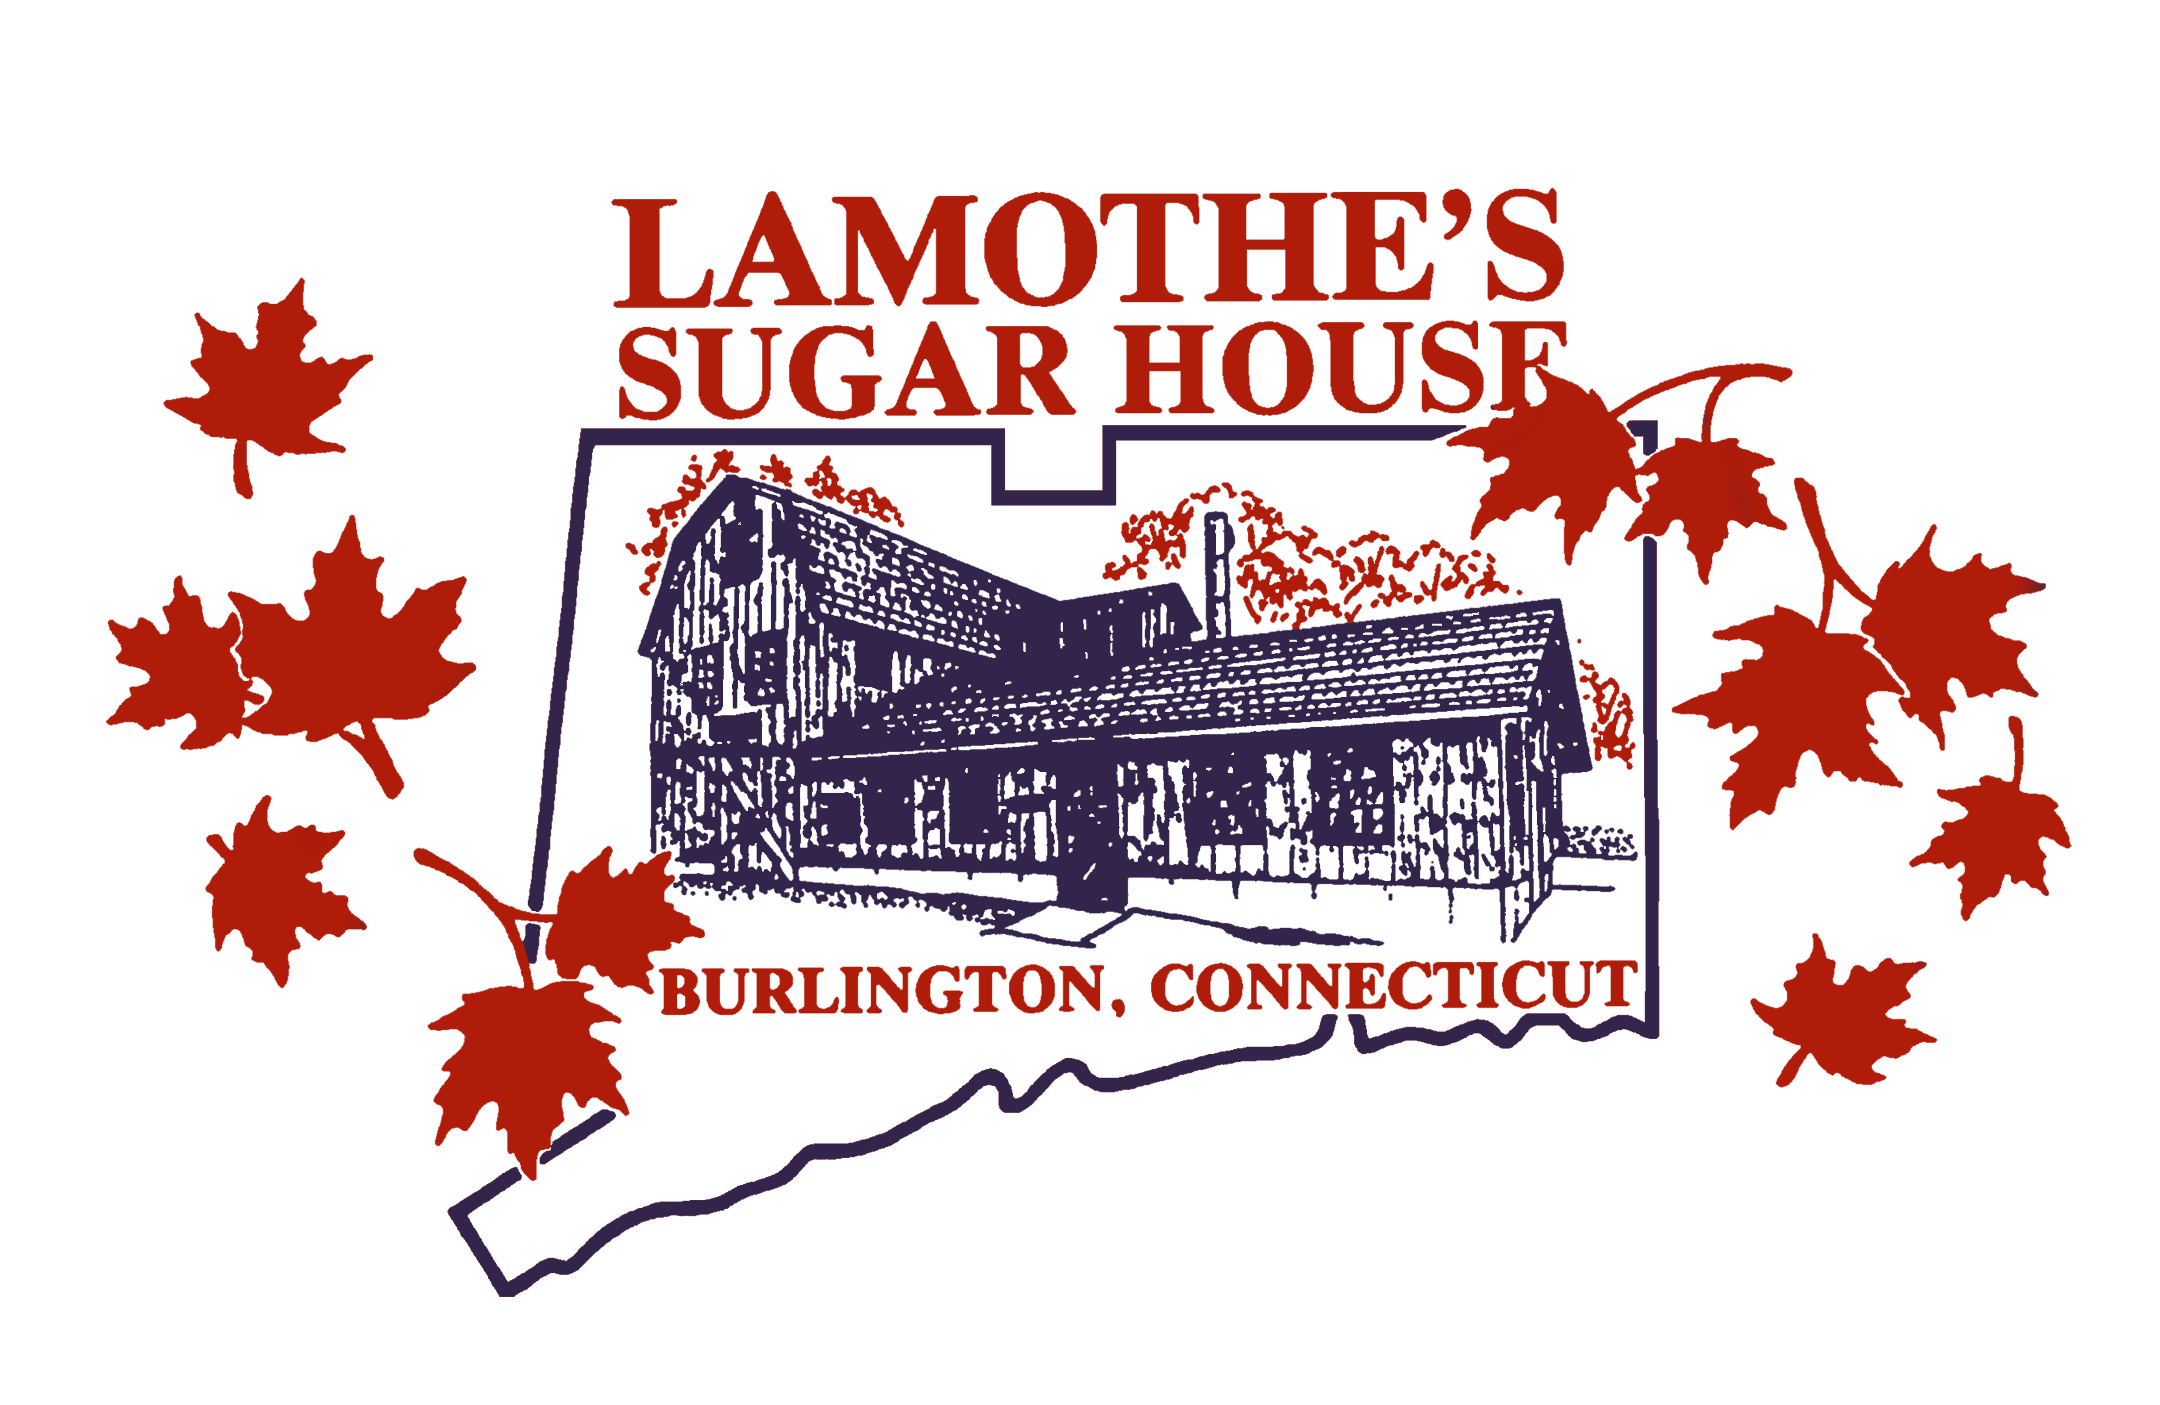 Lamothe's Sugar House